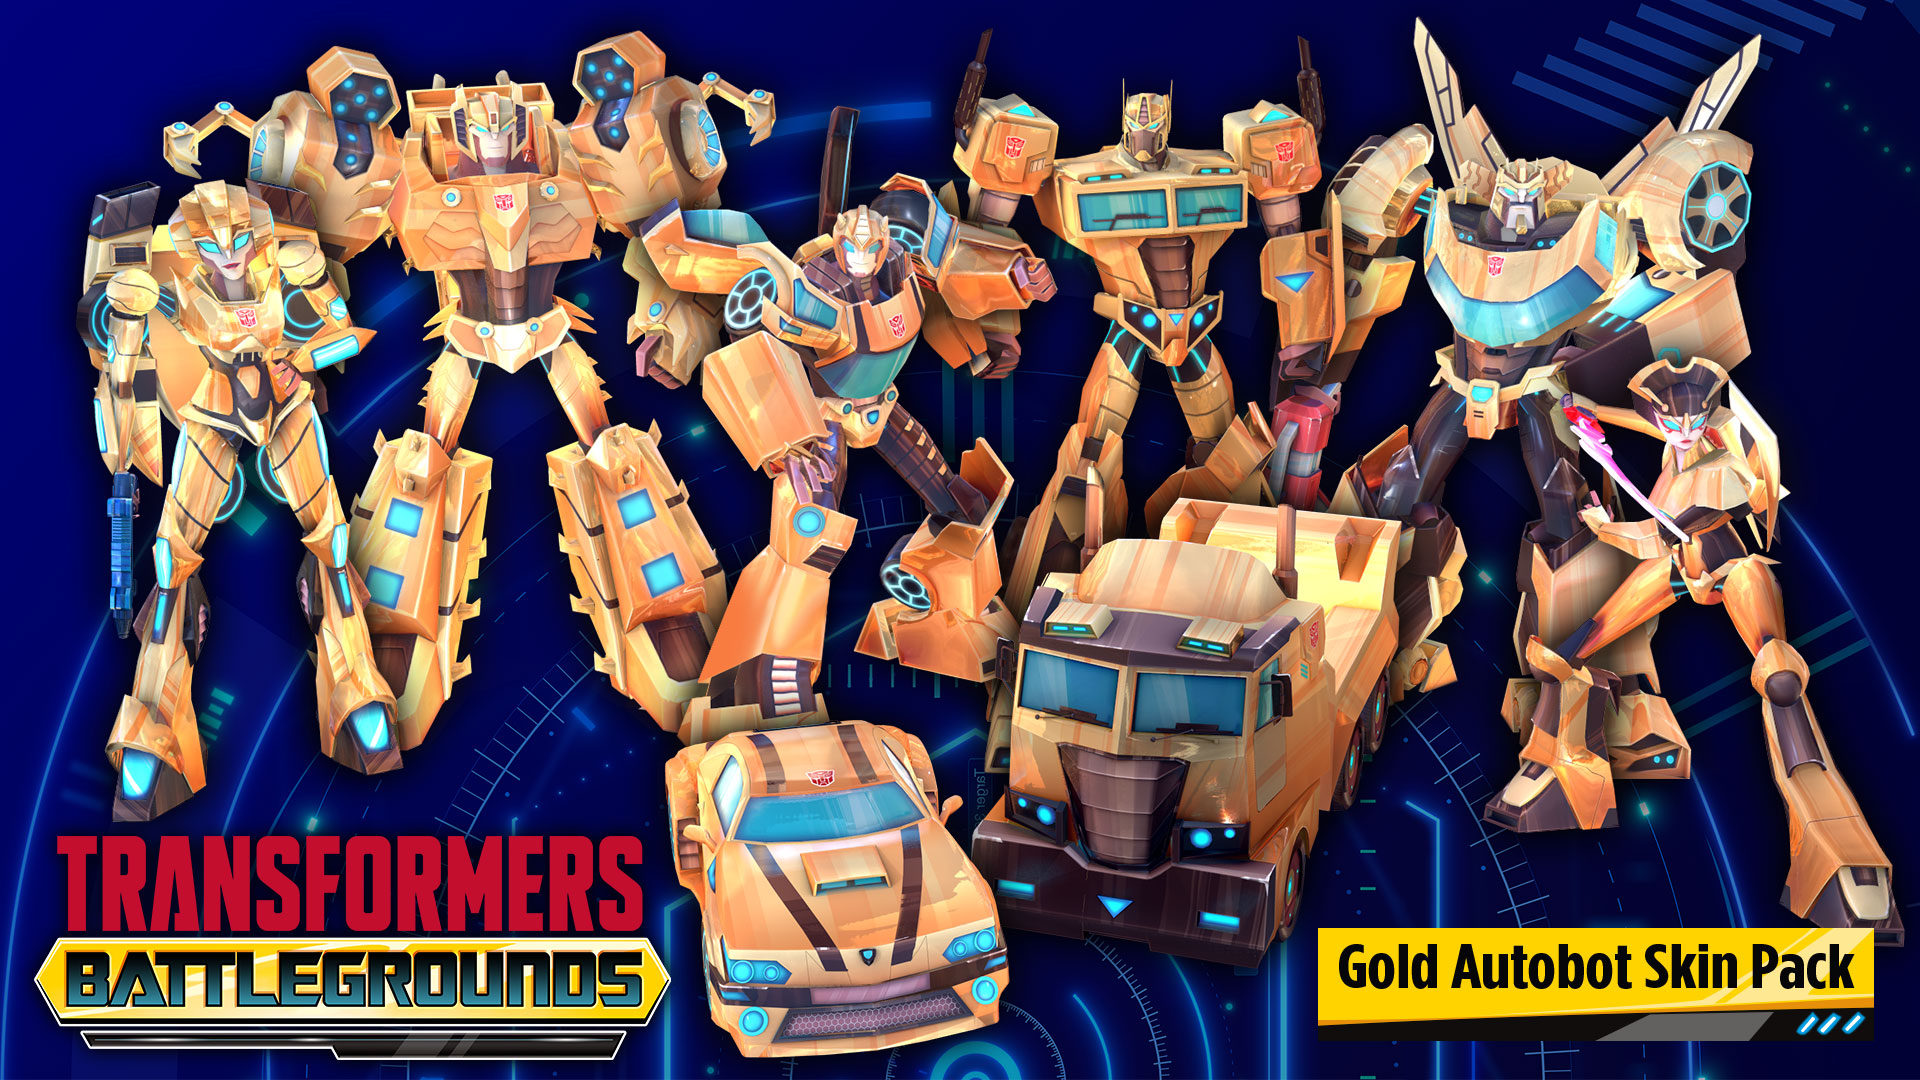 Gold Autobot Skin Pack